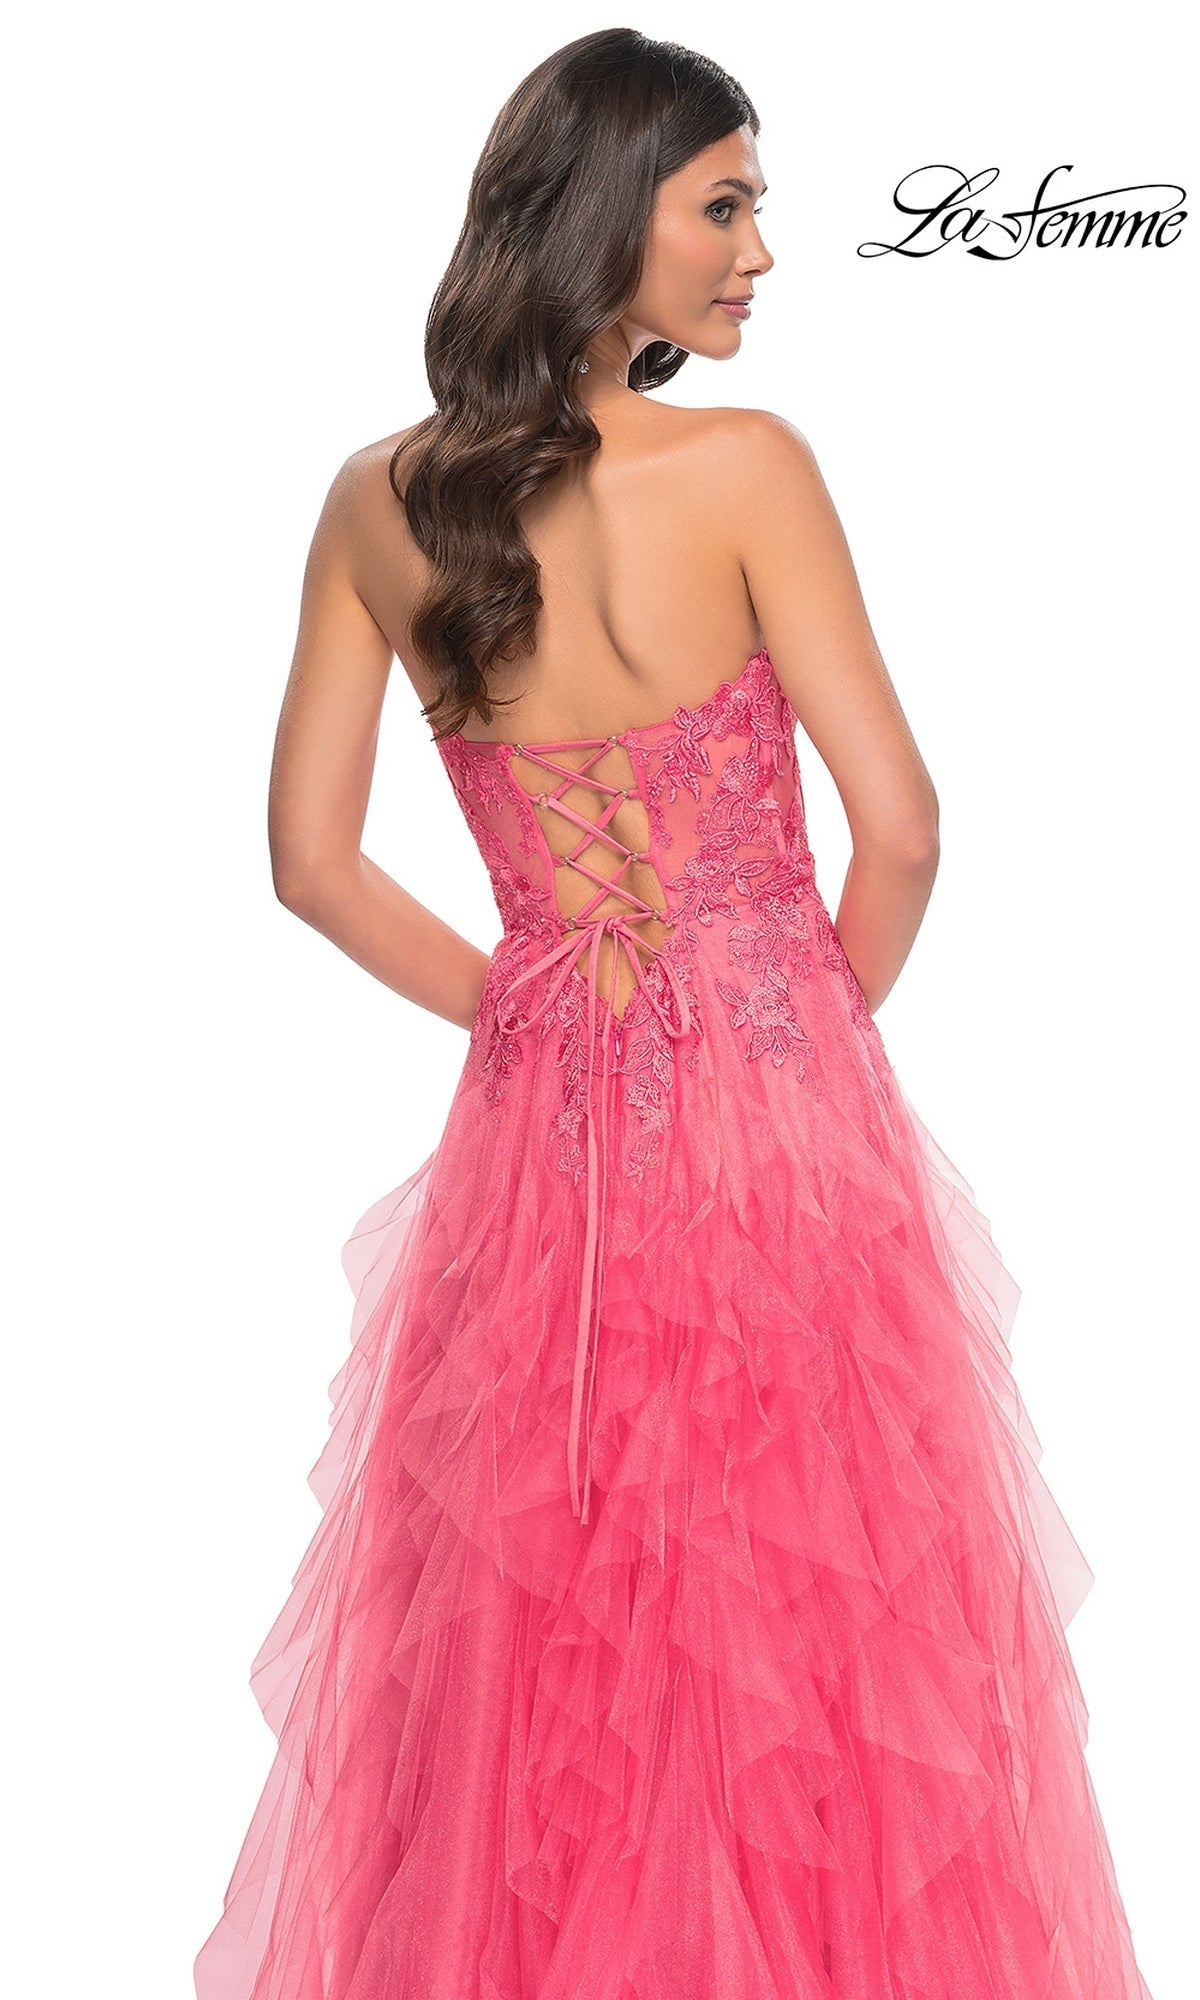  La Femme 32286 Formal Prom Dress